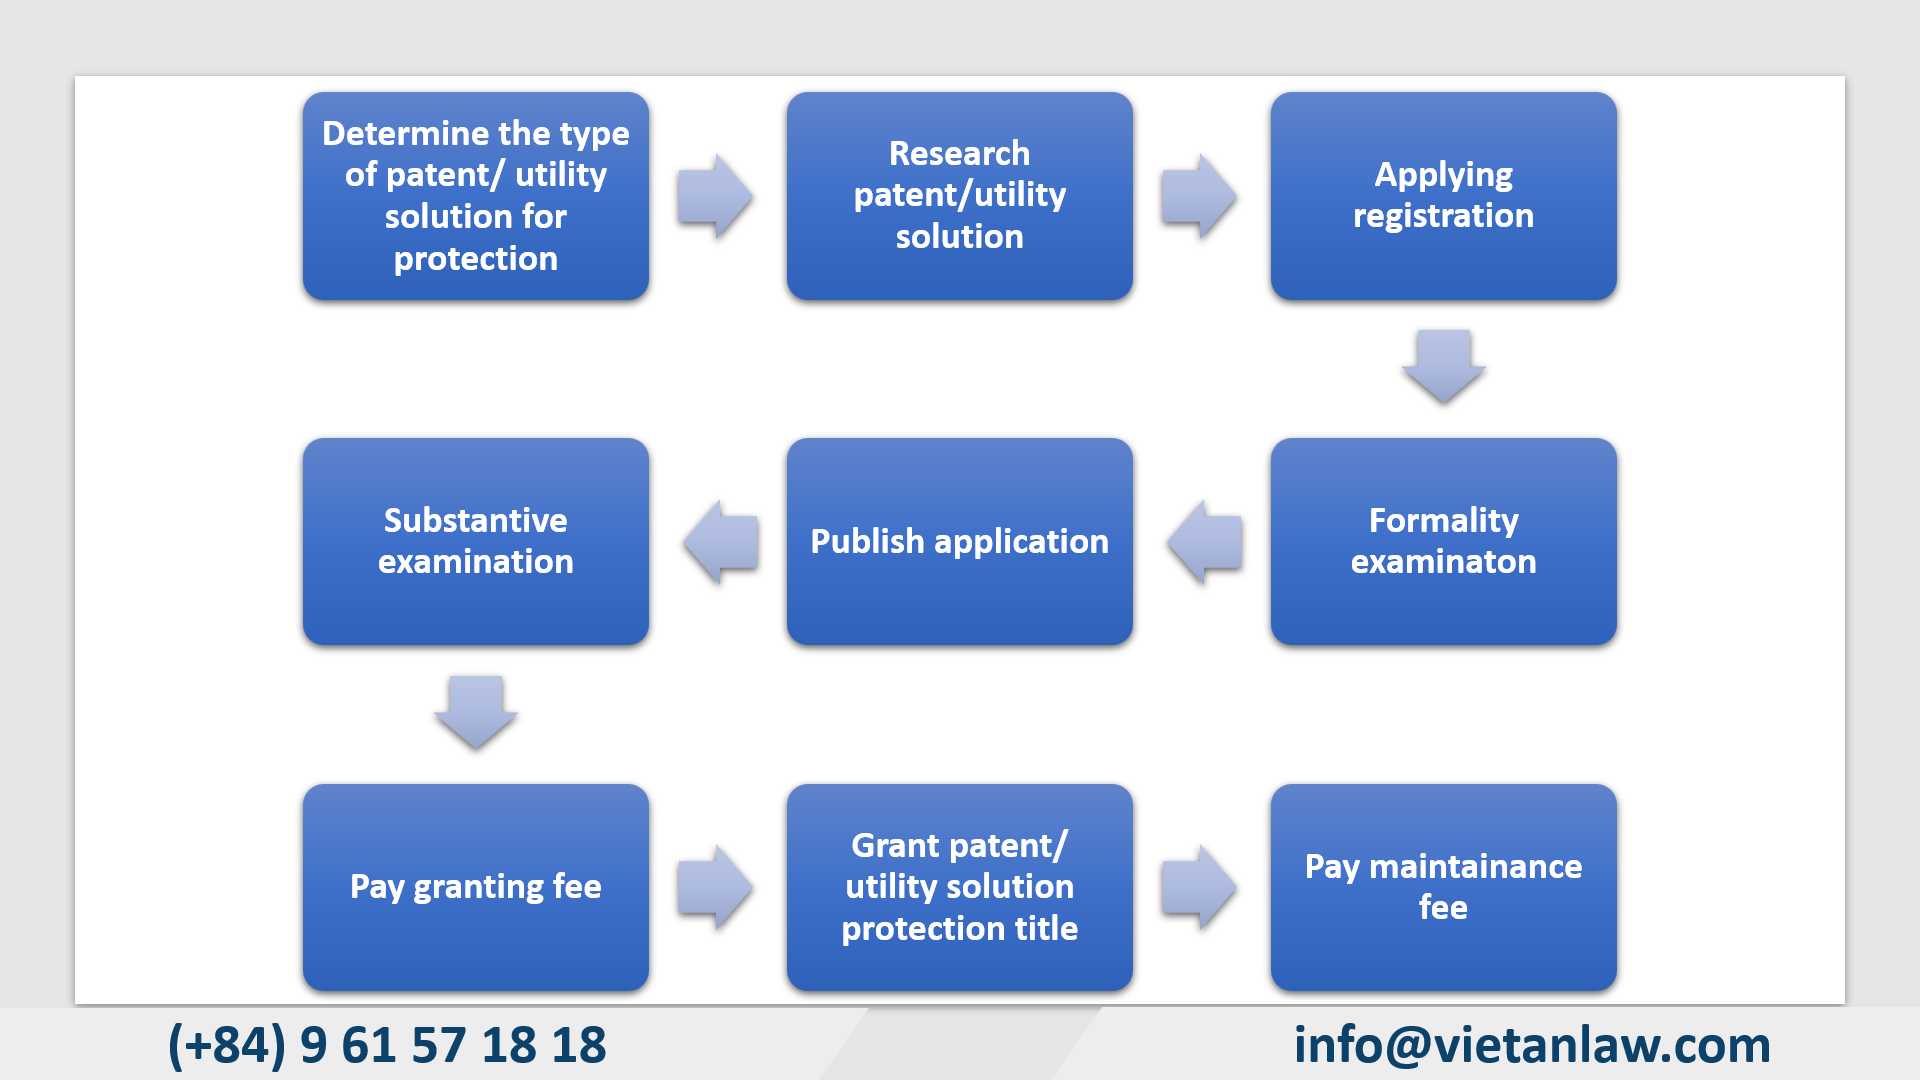 Procedures for registering patentutility solution in Vietnam